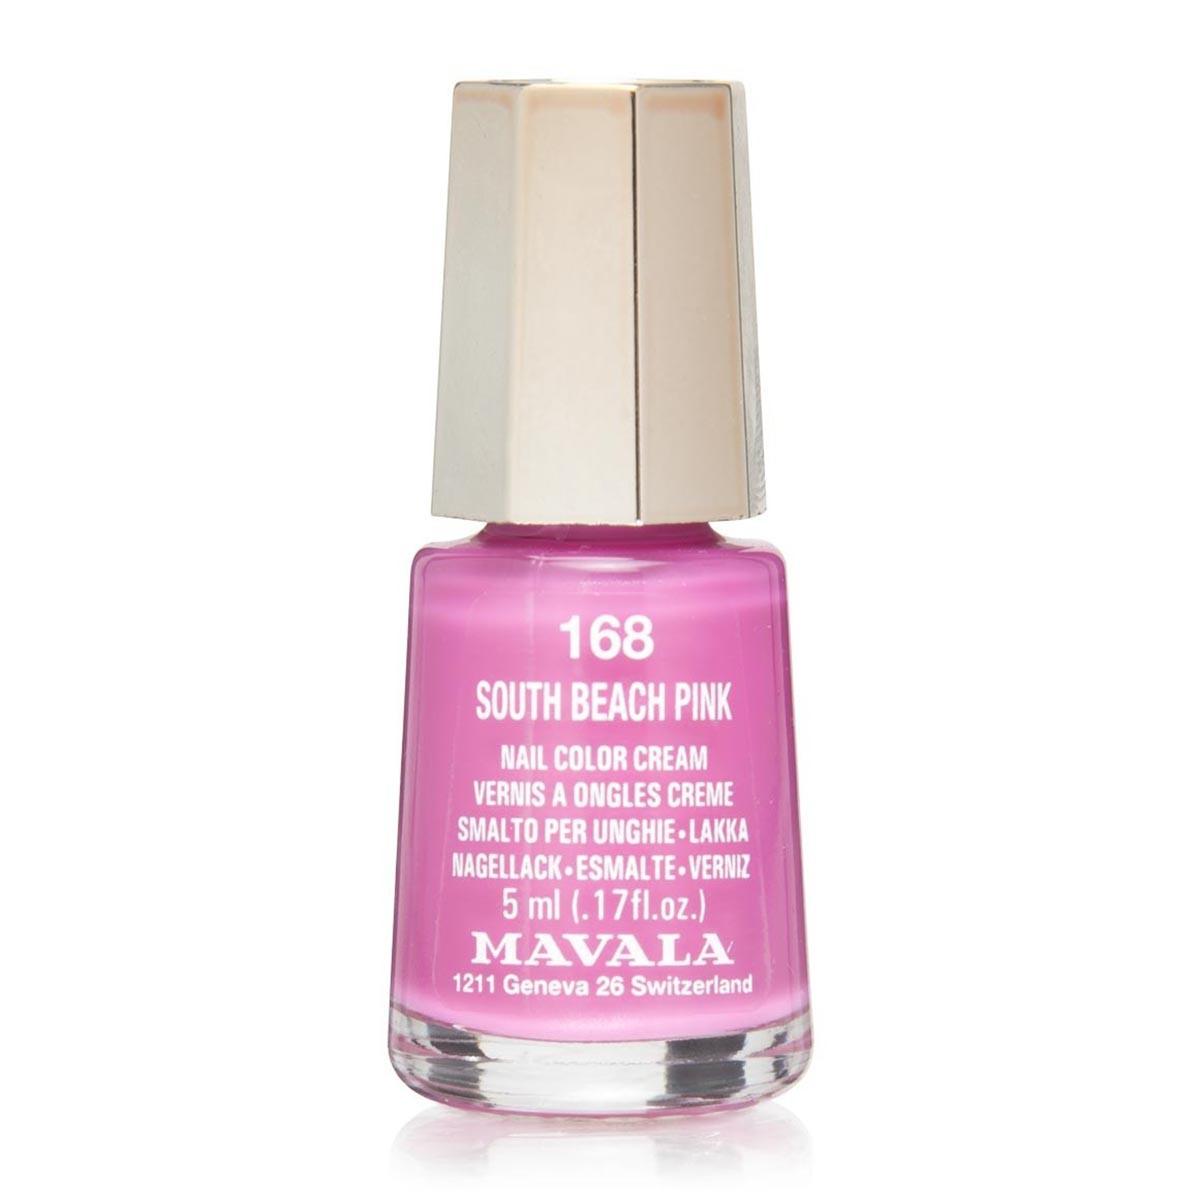 mavala-nail-lacquer-168-south-beach-pink